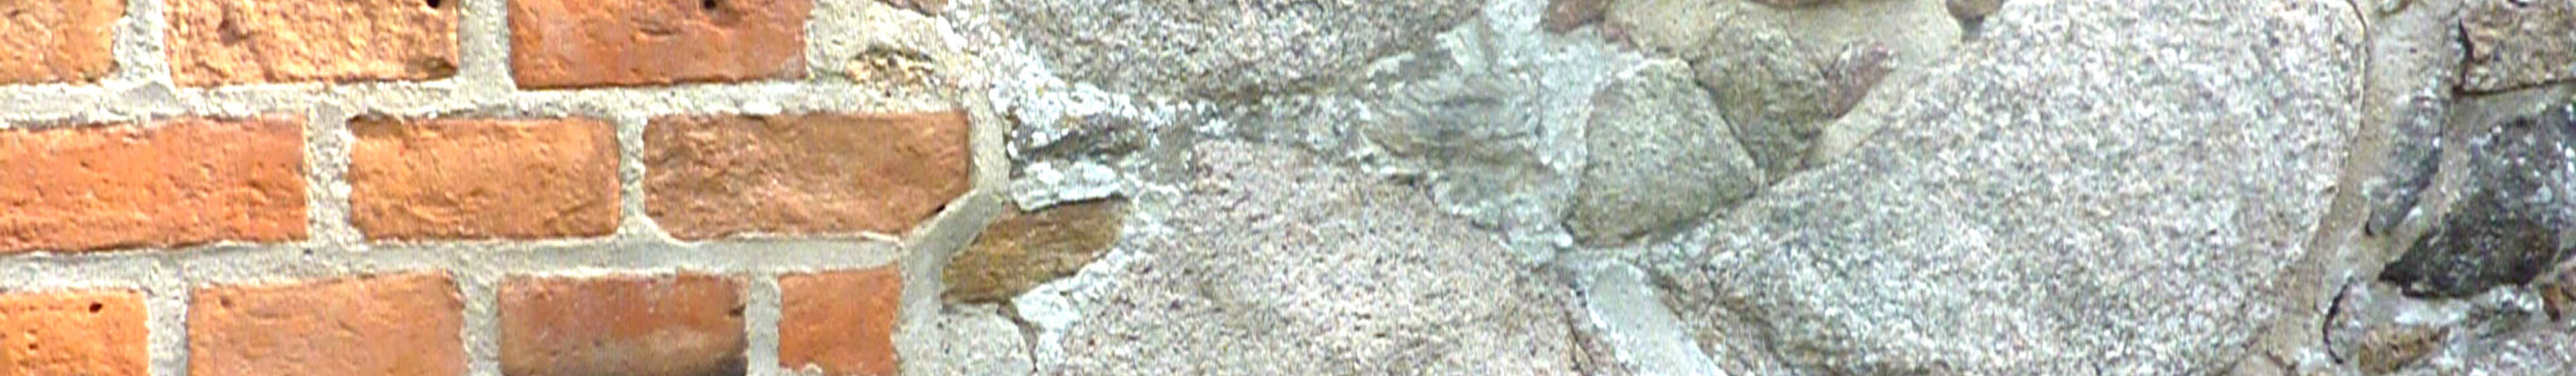 radegaster mauer kopfbild